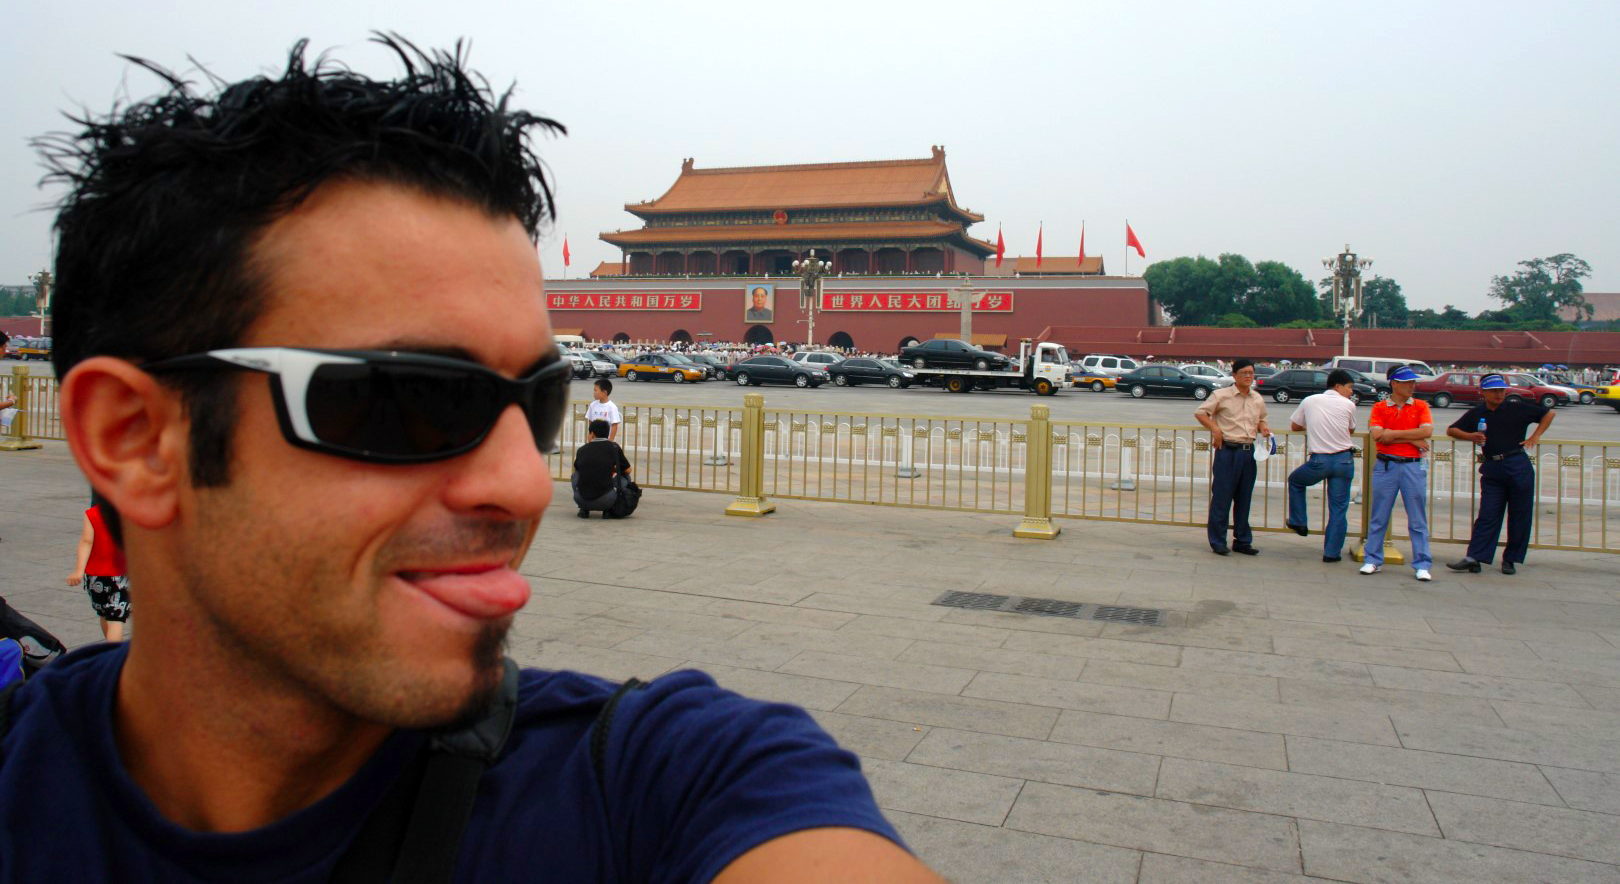 Qué ver en Pekín, China: Plaza de Tian’anmen en Pekin / Beijing - China